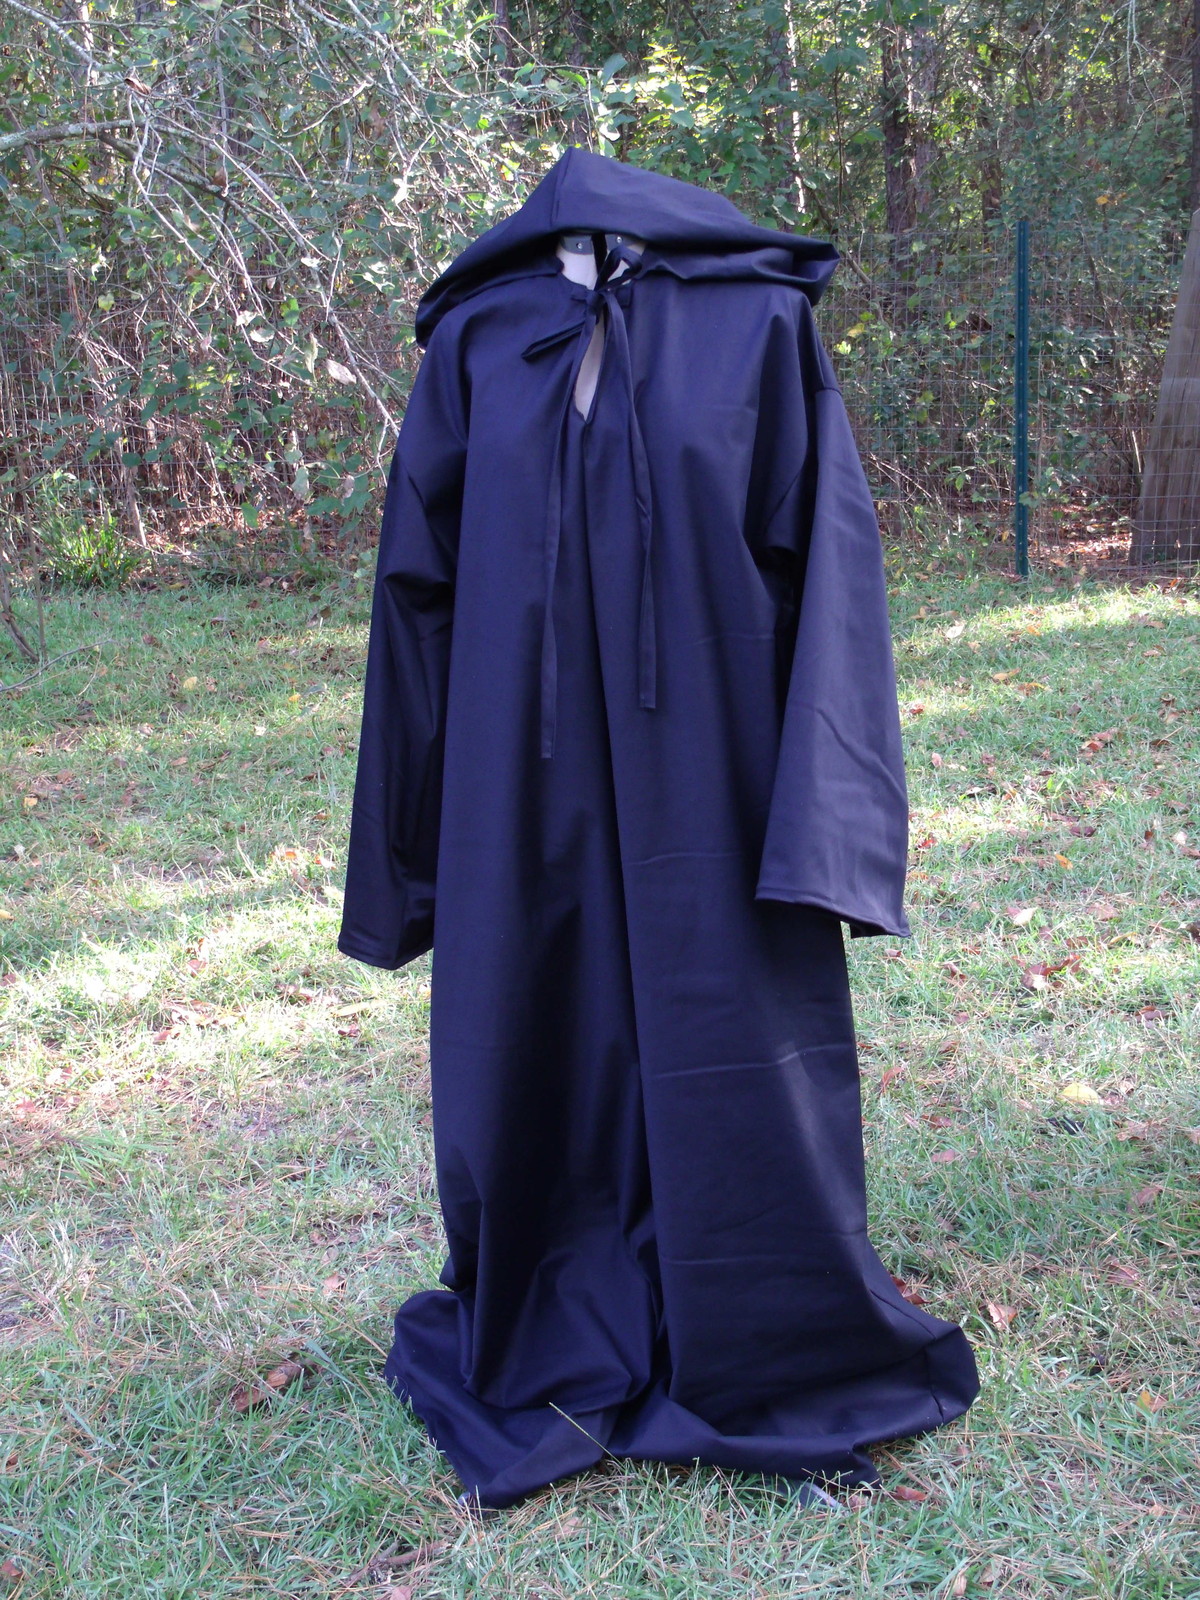 Black Hooded Robe - Medieval & Renaissance